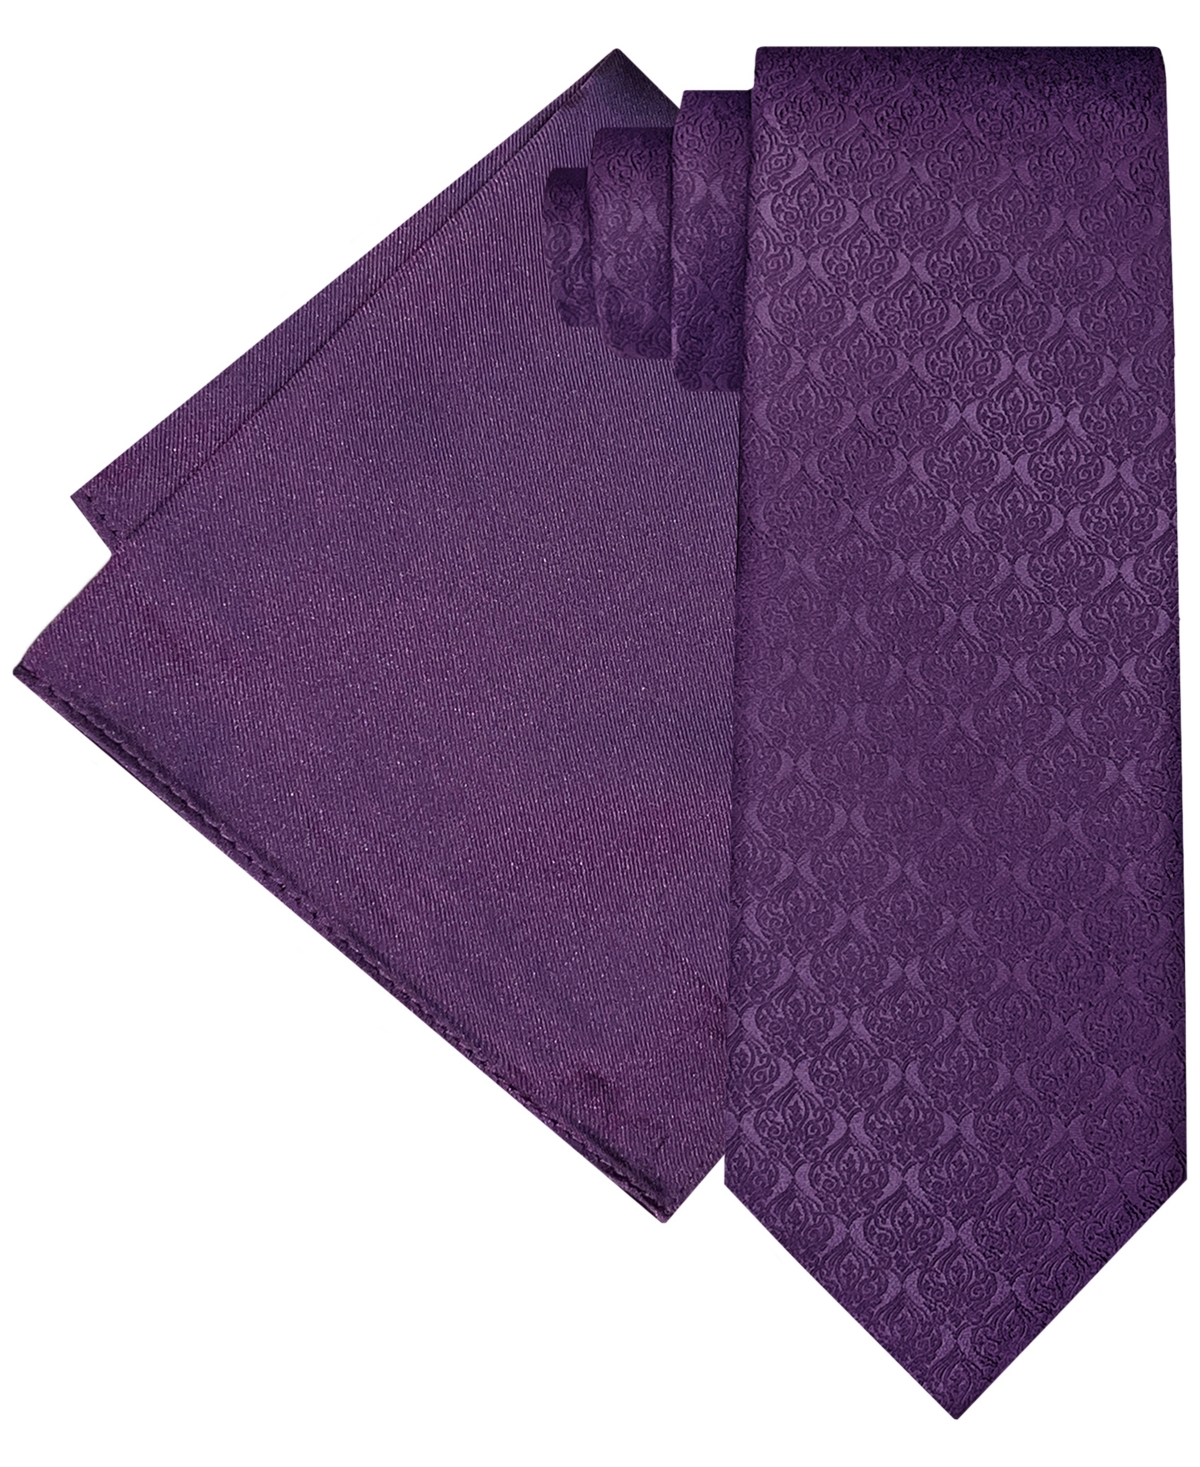 Steve Harvey Men's Textured Tonal Tie & Solid Pocket Square Set In Plum